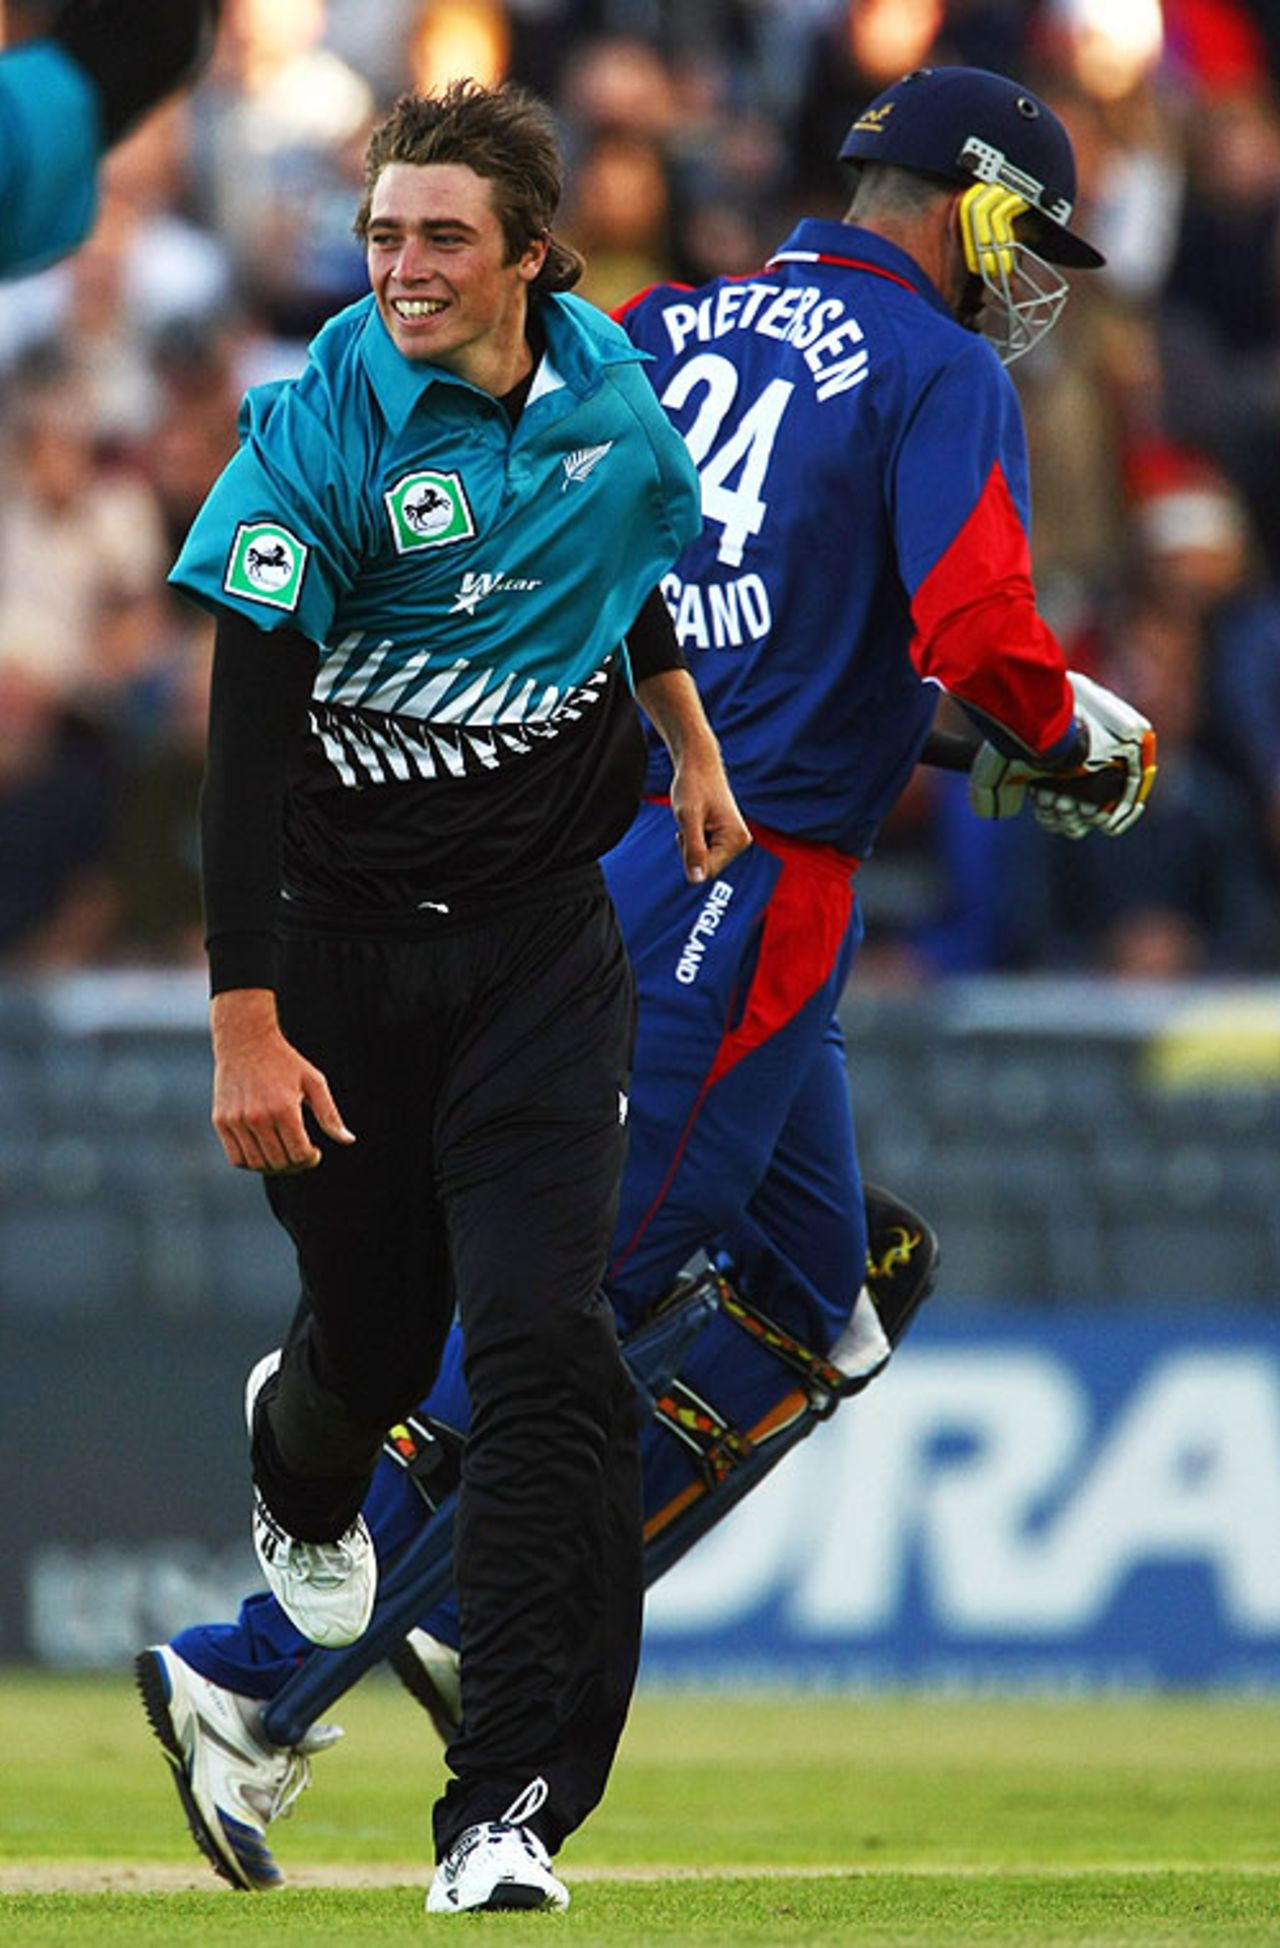 Tim Southee dismisses Kevin Pietersen for 3, New Zealand v England, 2nd Twenty20, Christchurch, February 7, 2008